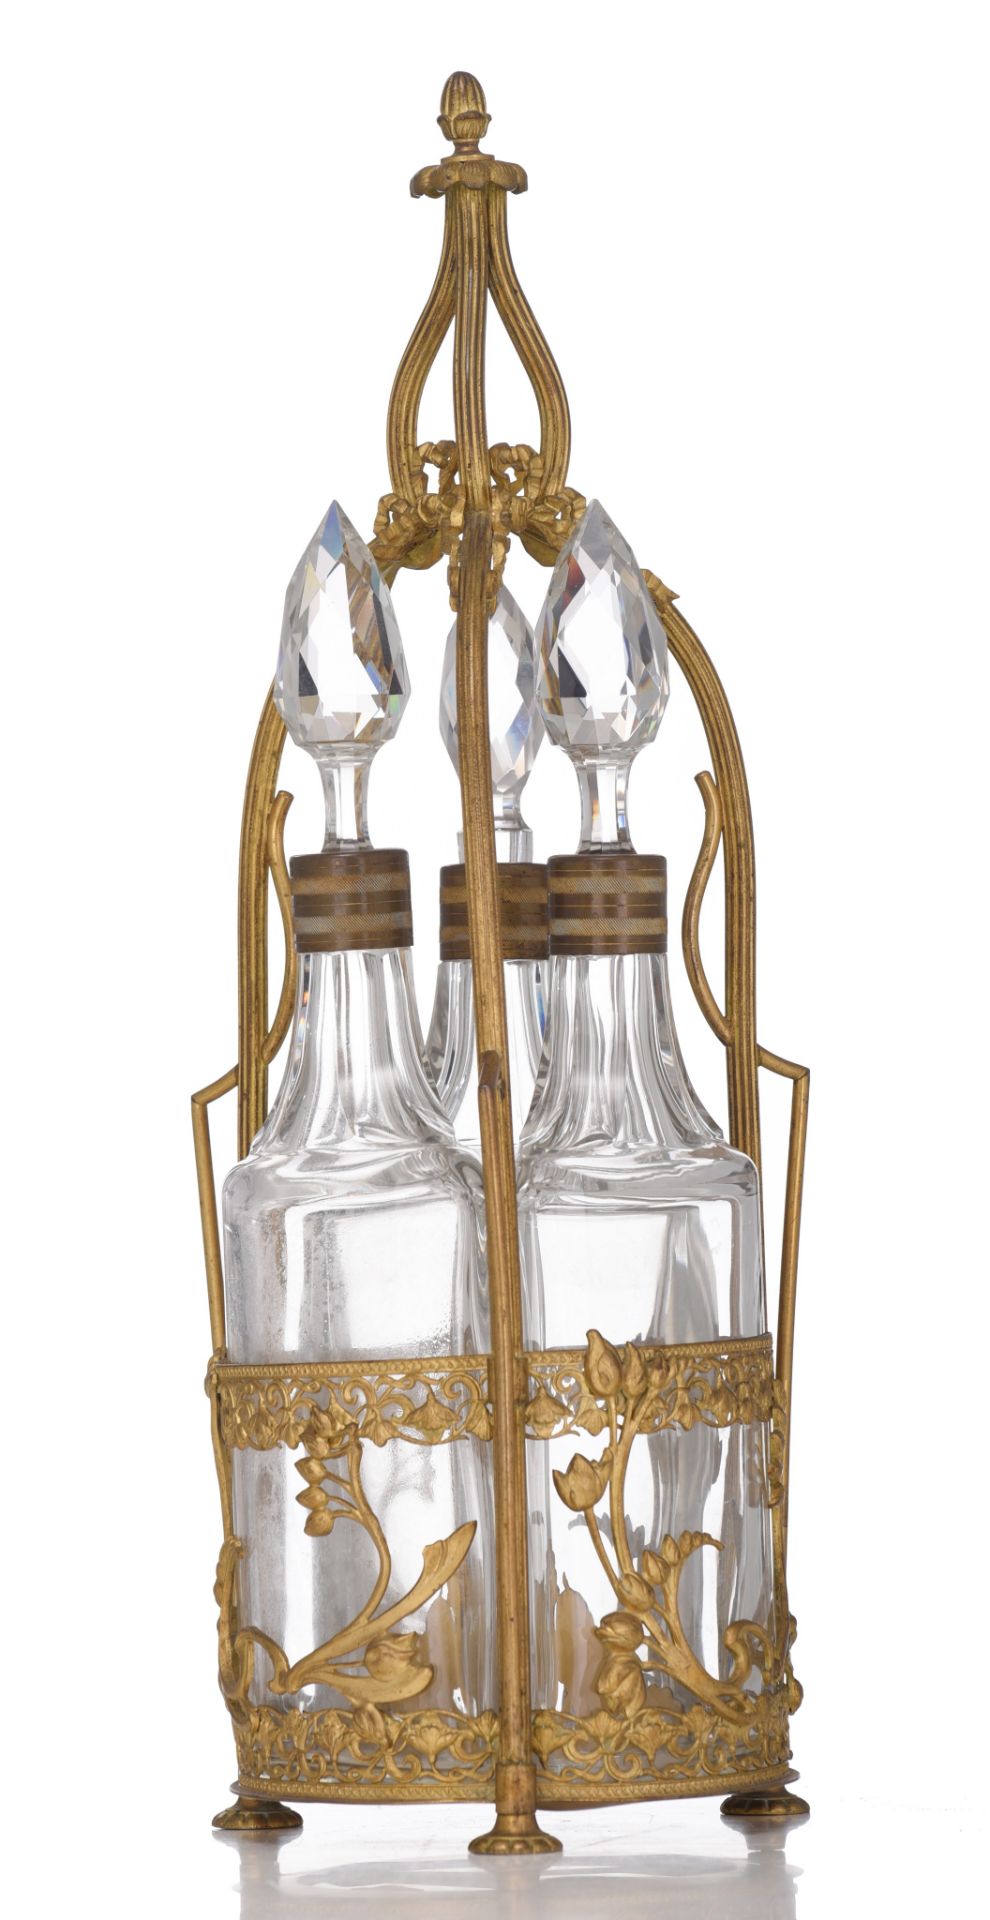 A fine Art Nouveau gilt brass cruet set with three cut glass carafes, H 43,5 cm - Image 3 of 5